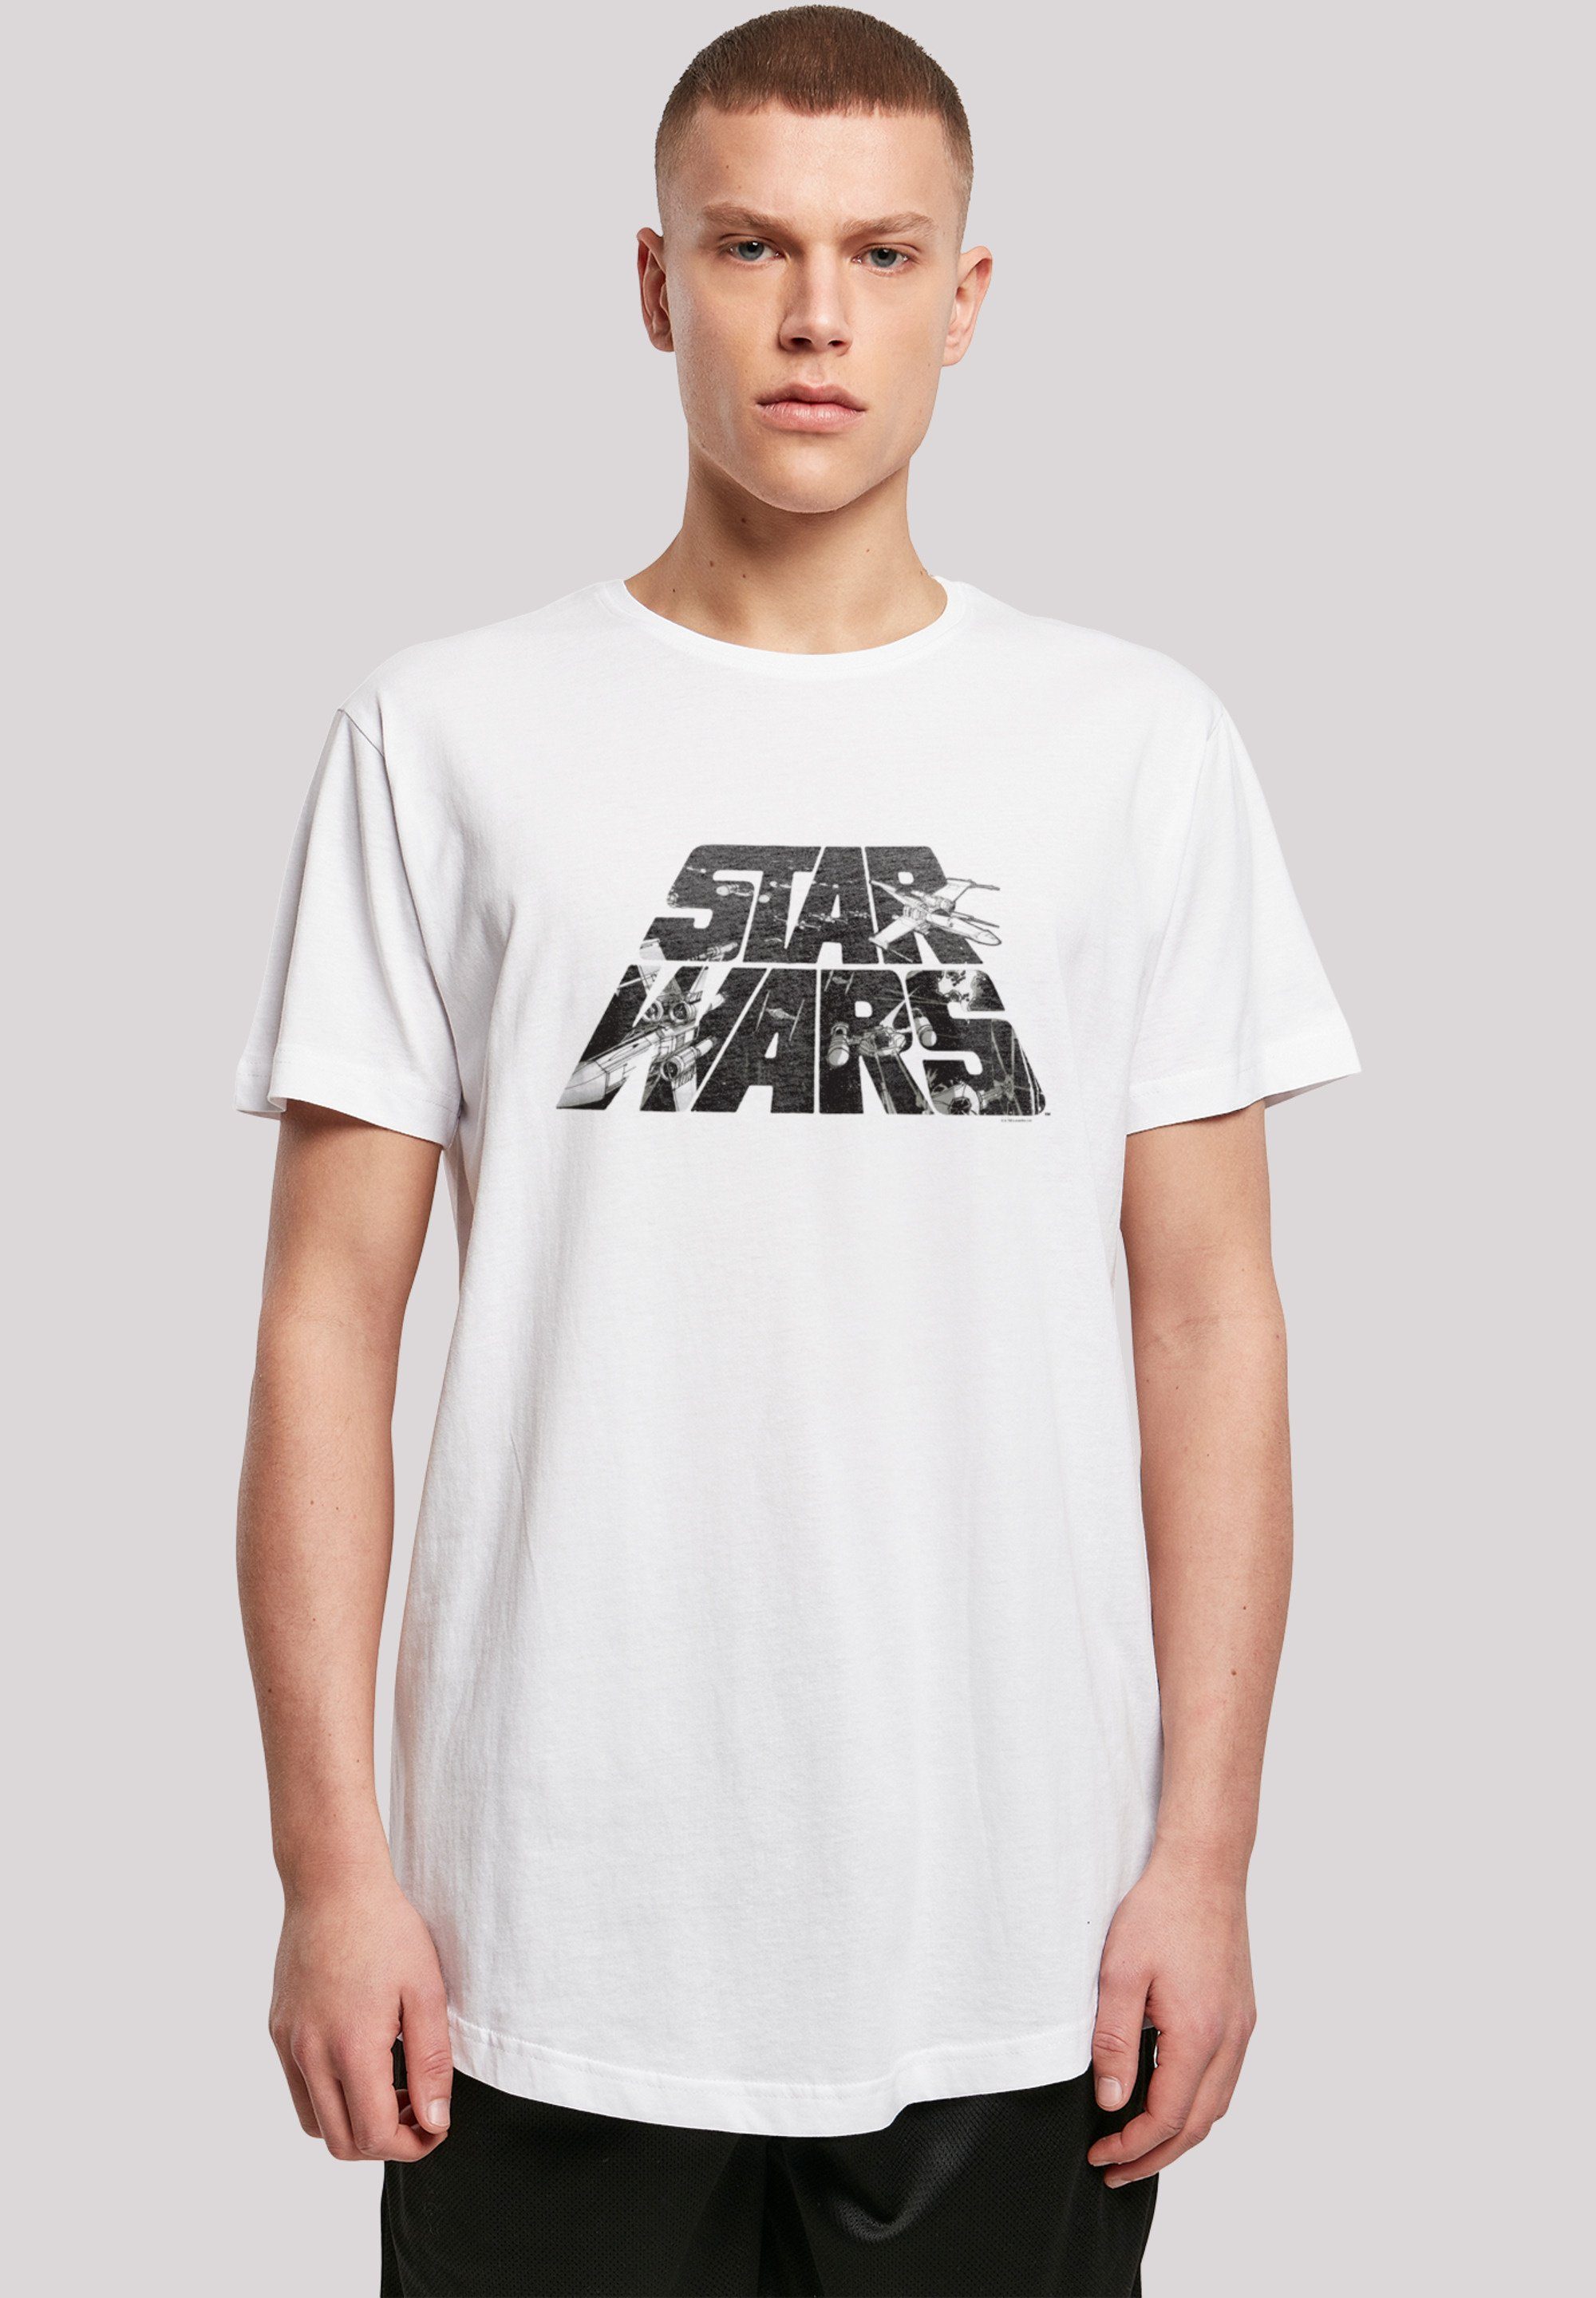 Logo T-Shirt Print Space Sketch Star F4NT4STIC Wars